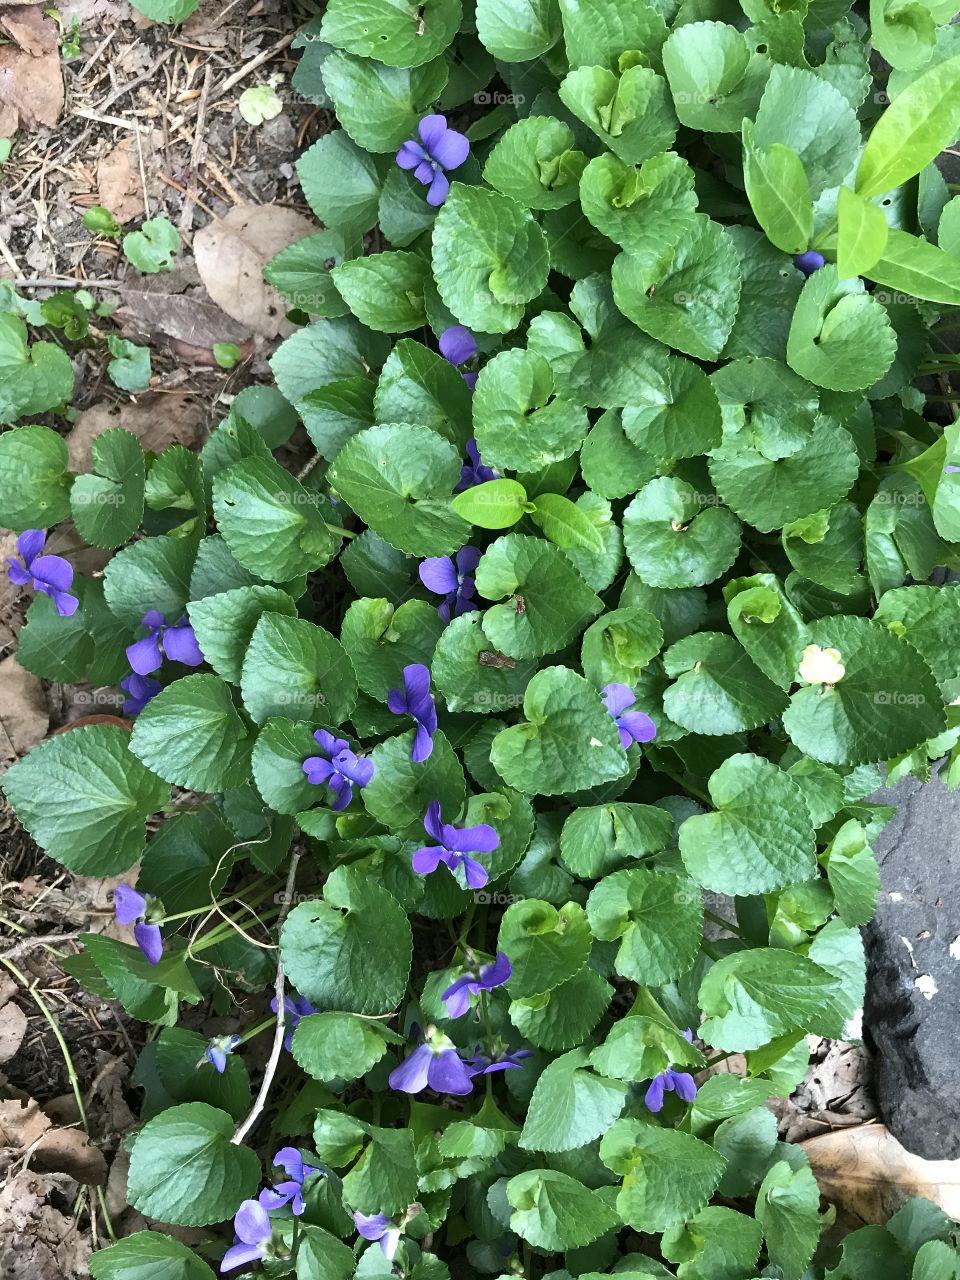 Patch of violets